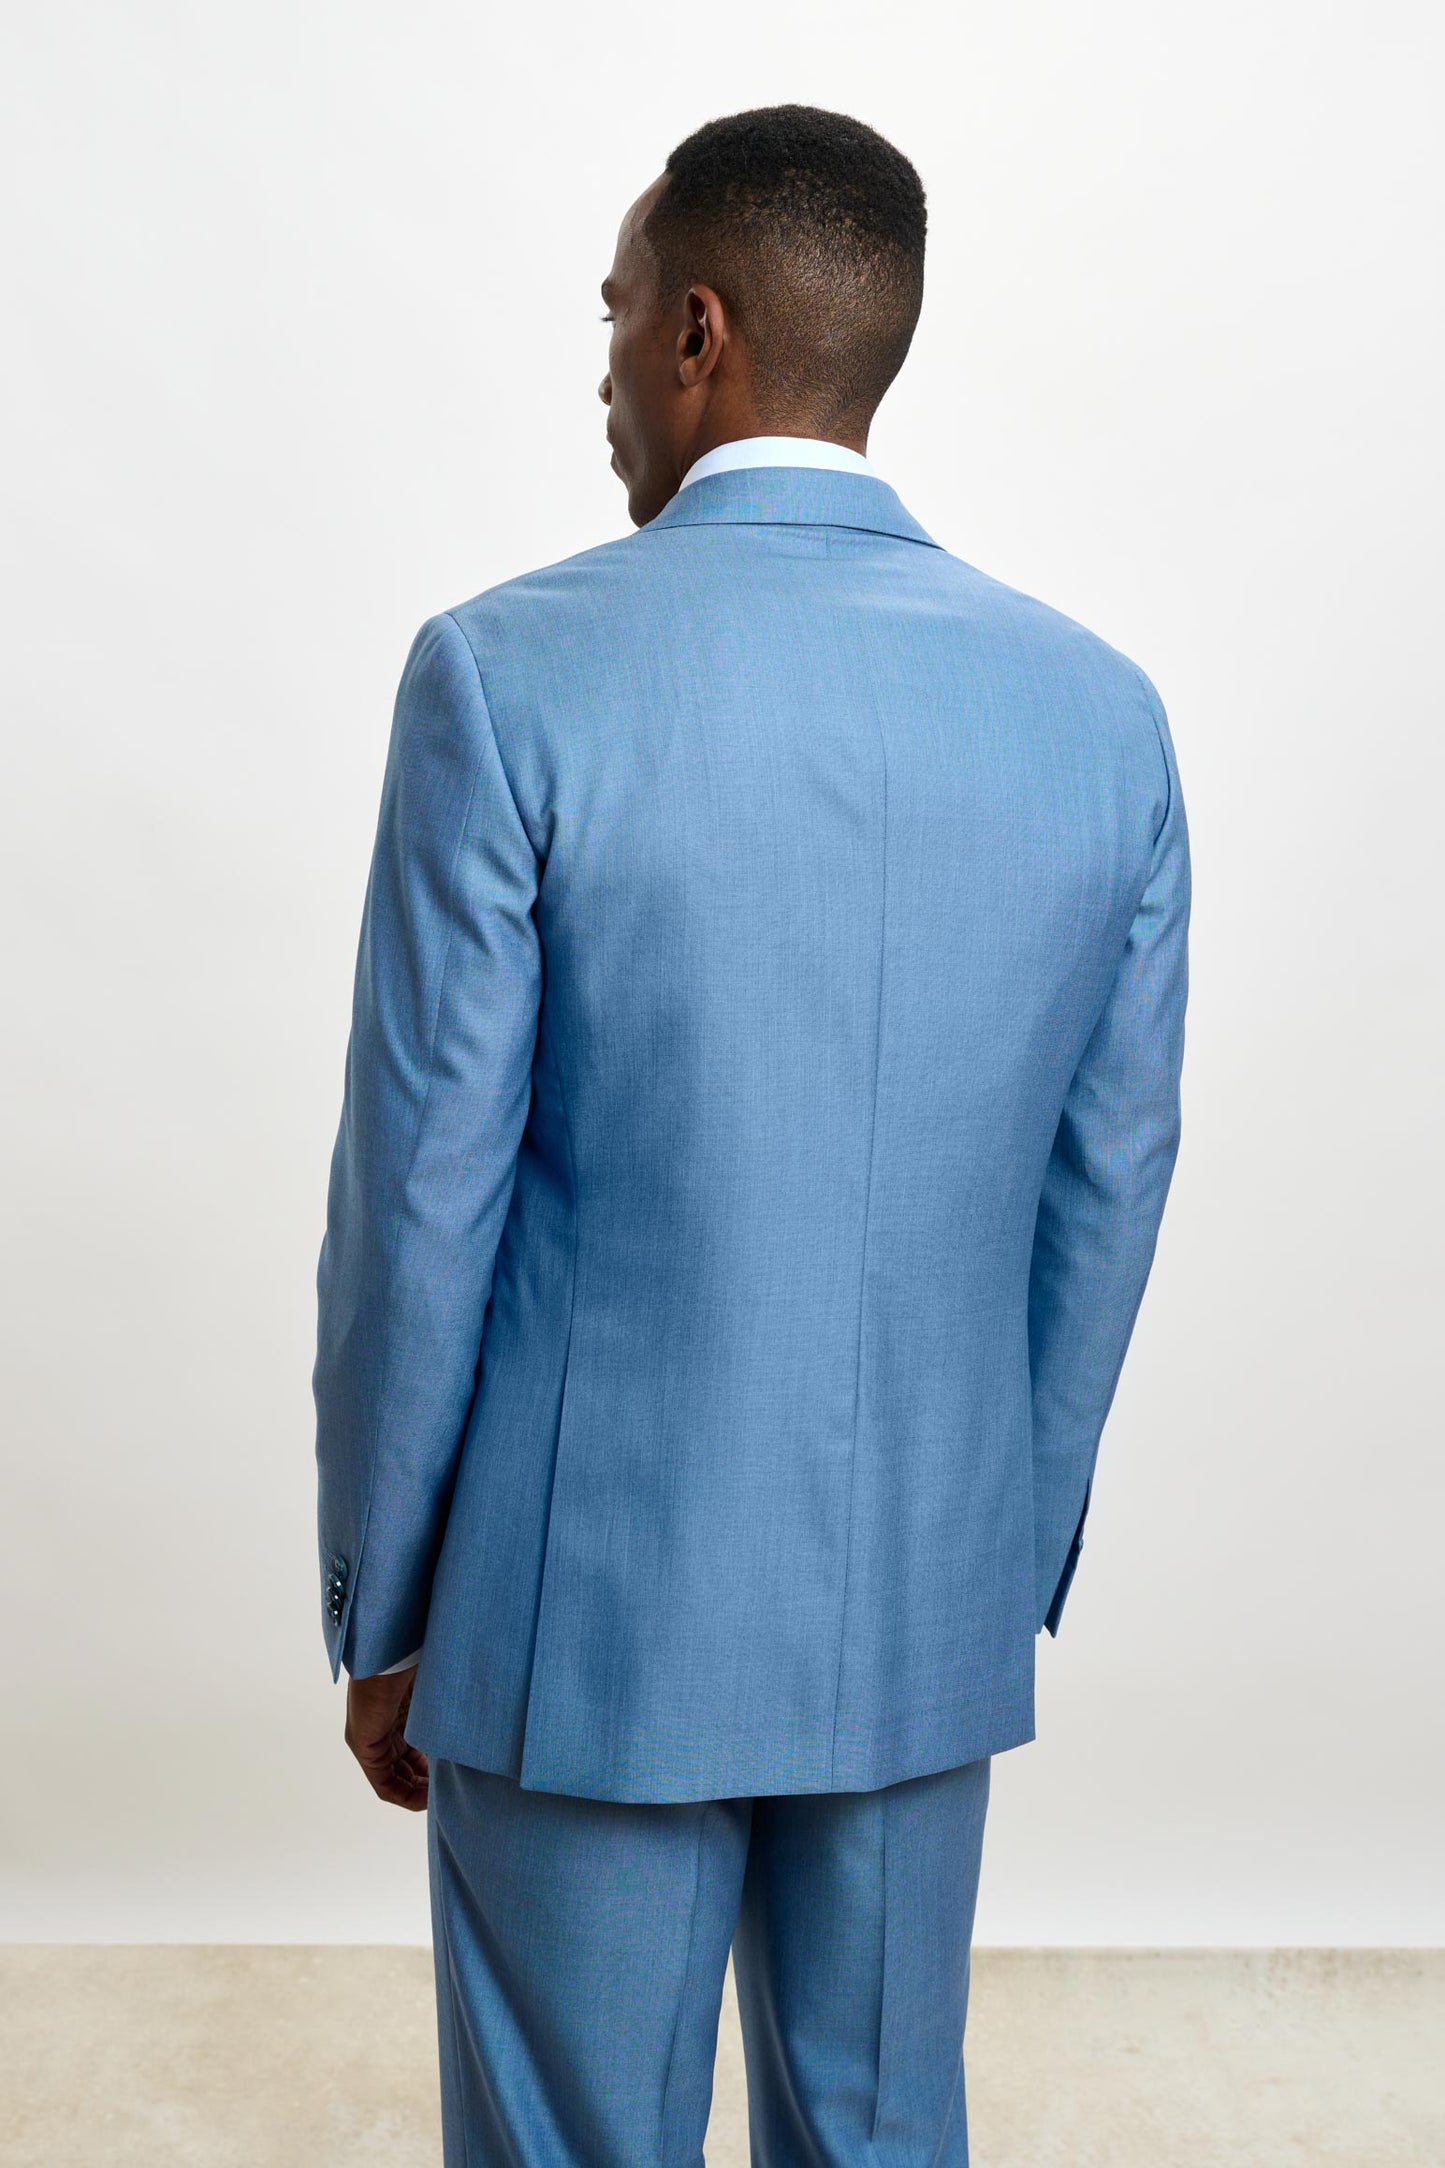 Soho Suit Sleek Plain Light Blue